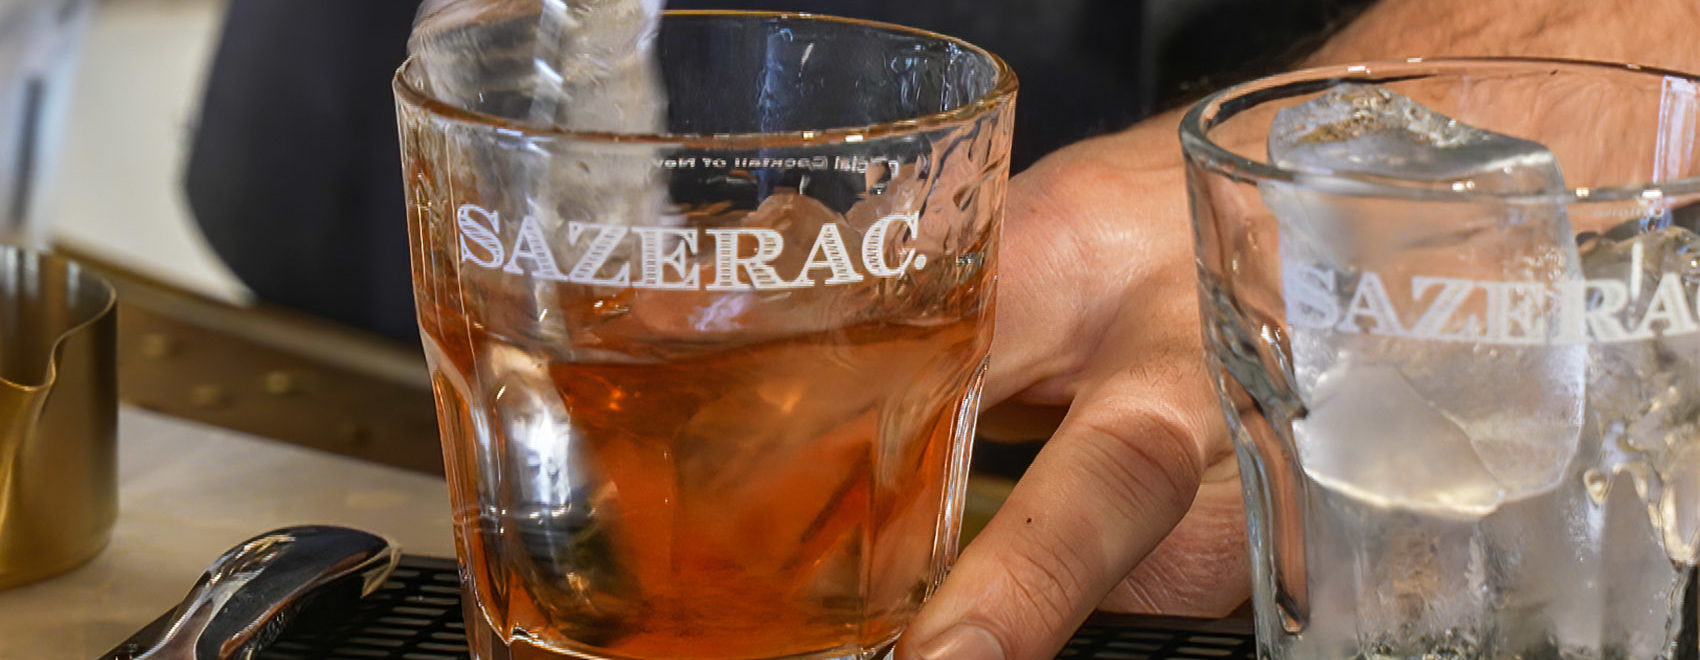 Sazerac cocktail on ice being stirred